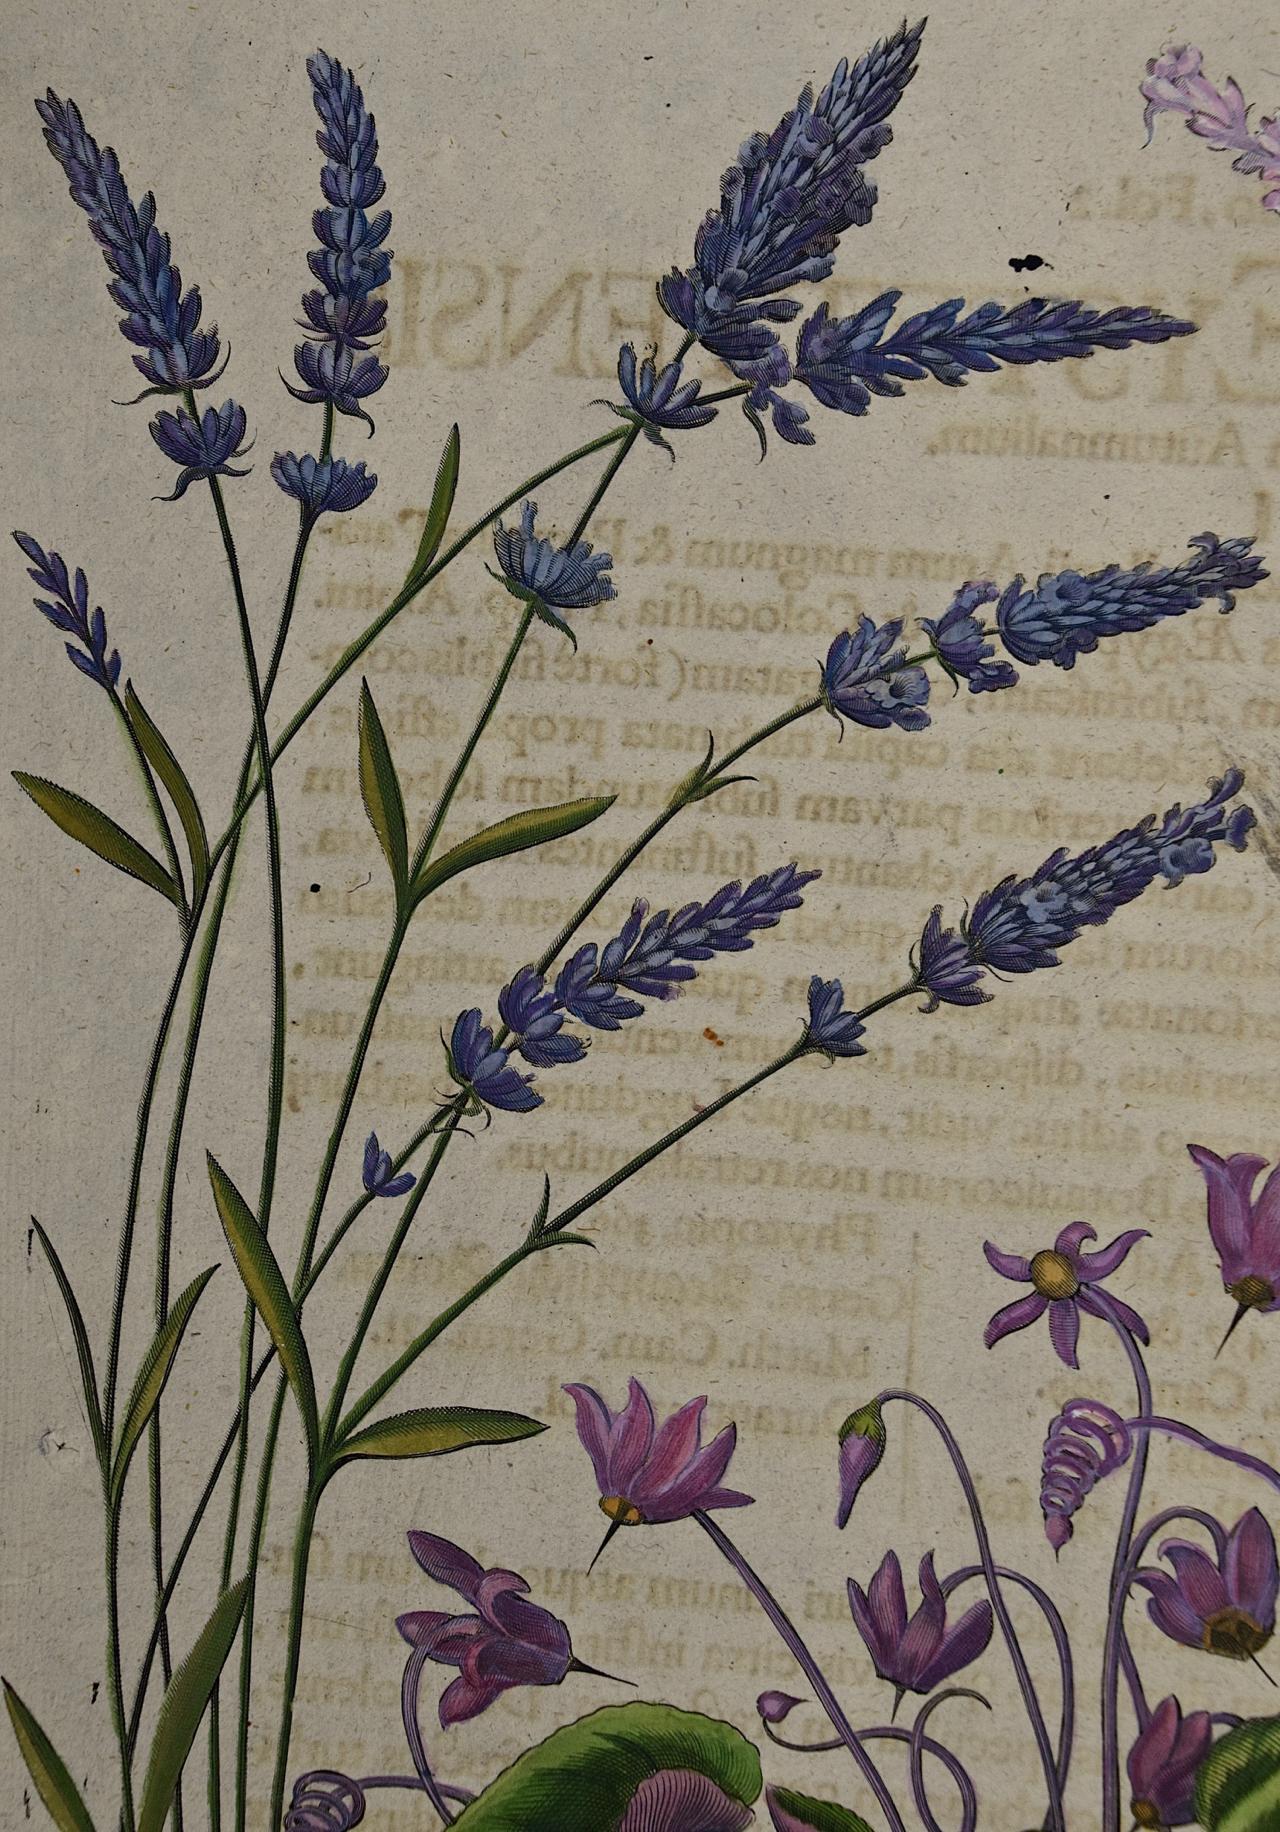 Besler Hand-colored Botanical Engraving of Flowering Cyclamen & Lavender Plants - Academic Print by Basilius Besler